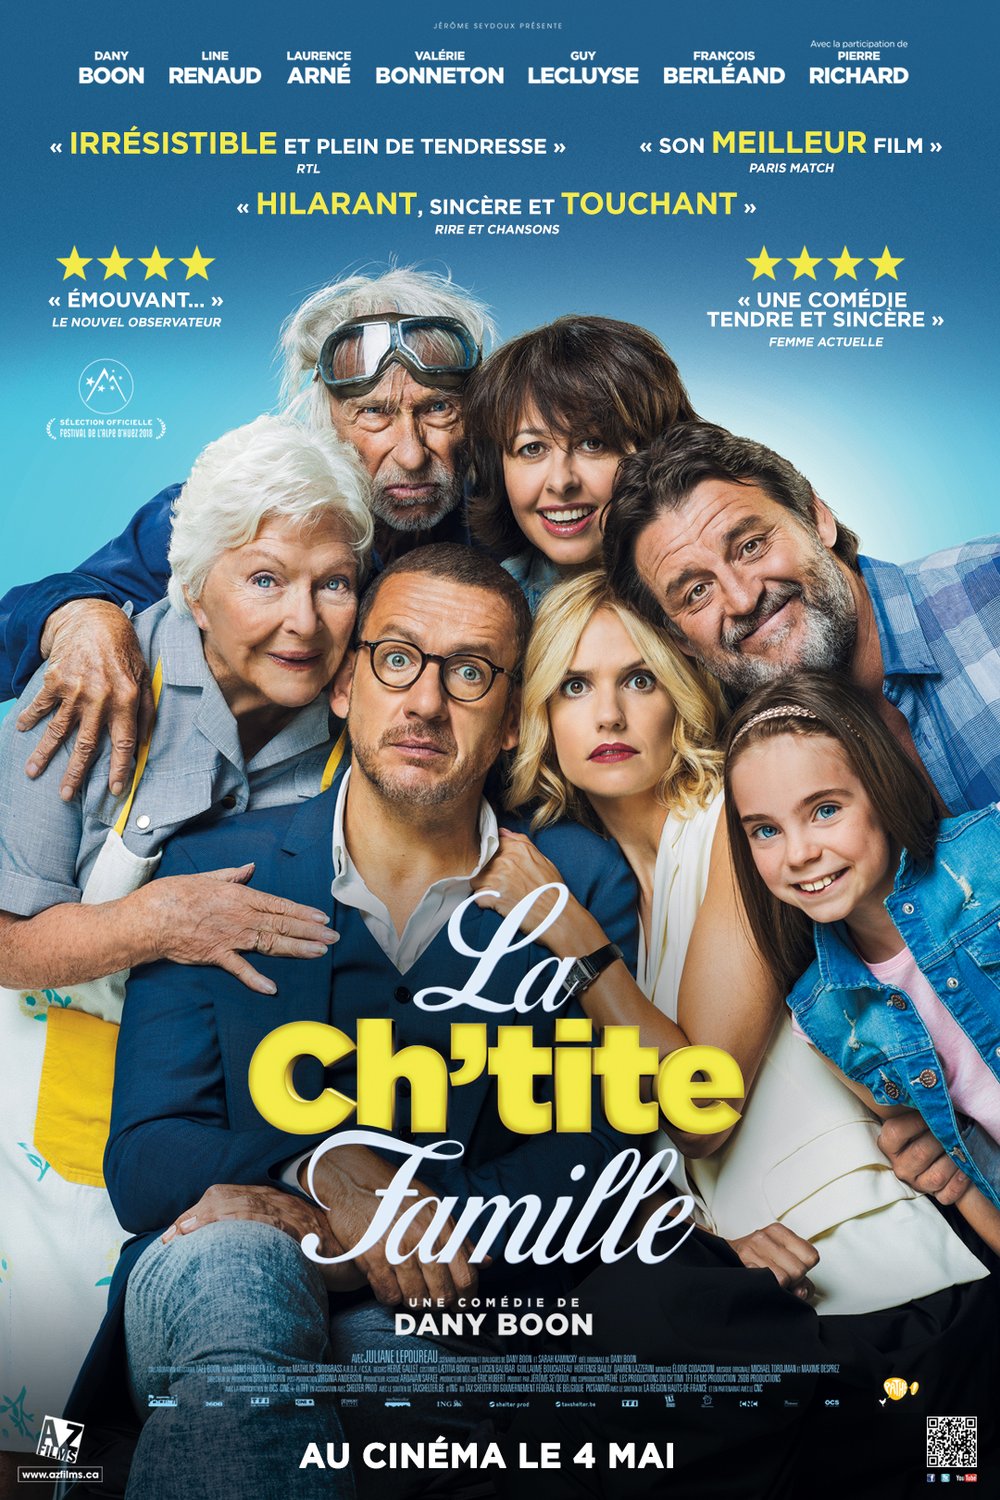 Poster of the movie La Ch'tite famille